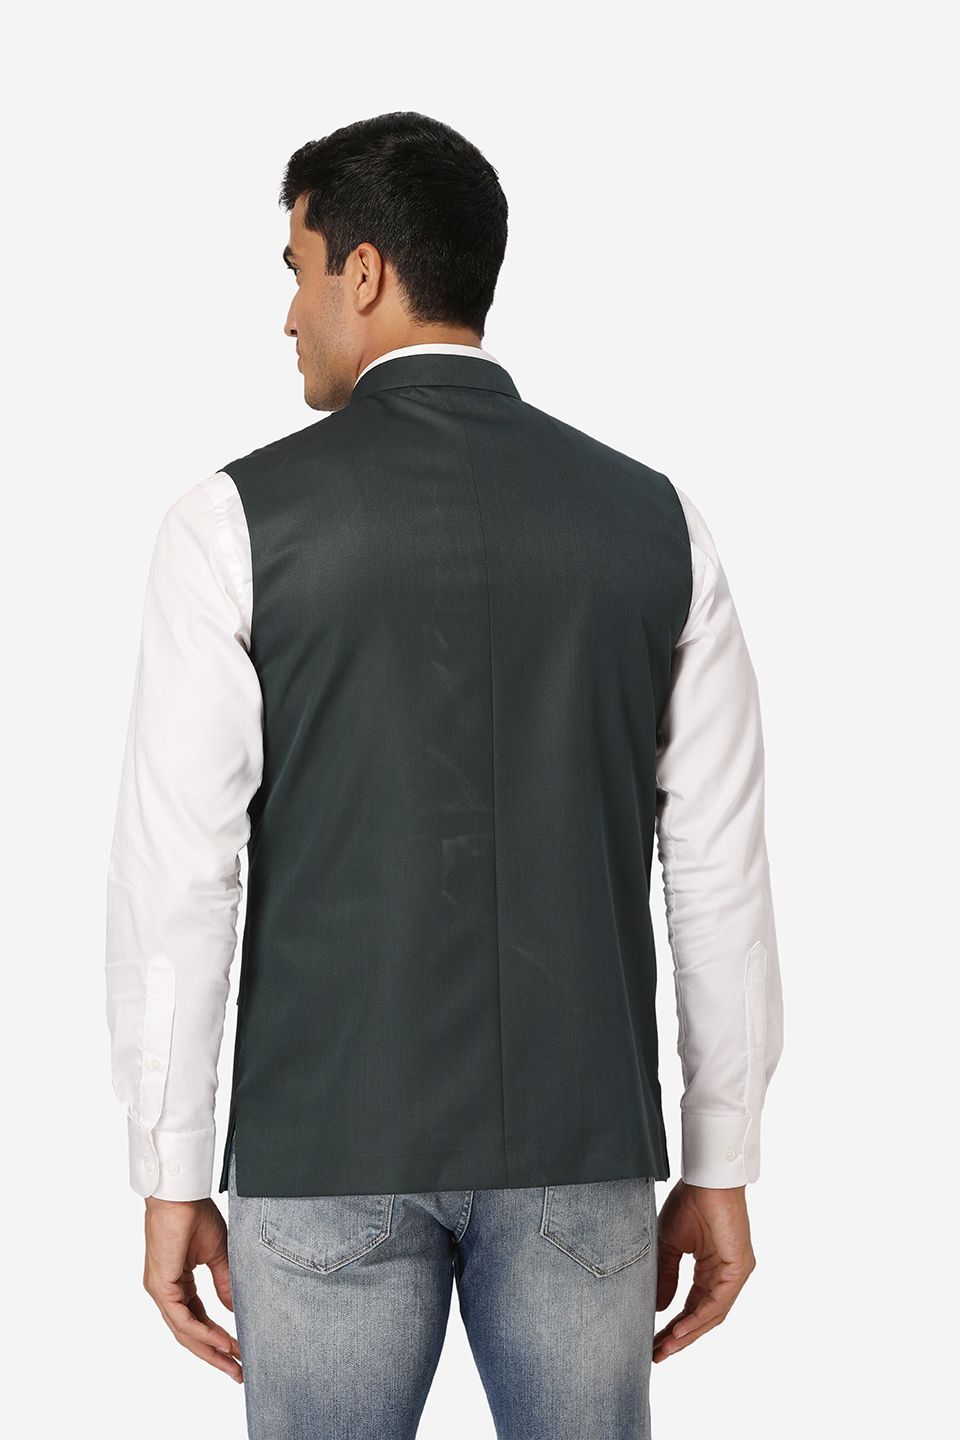 Wintage Men's Poly Cotton Festive and Casual Nehru Jacket Vest Waistcoat : Dark Green